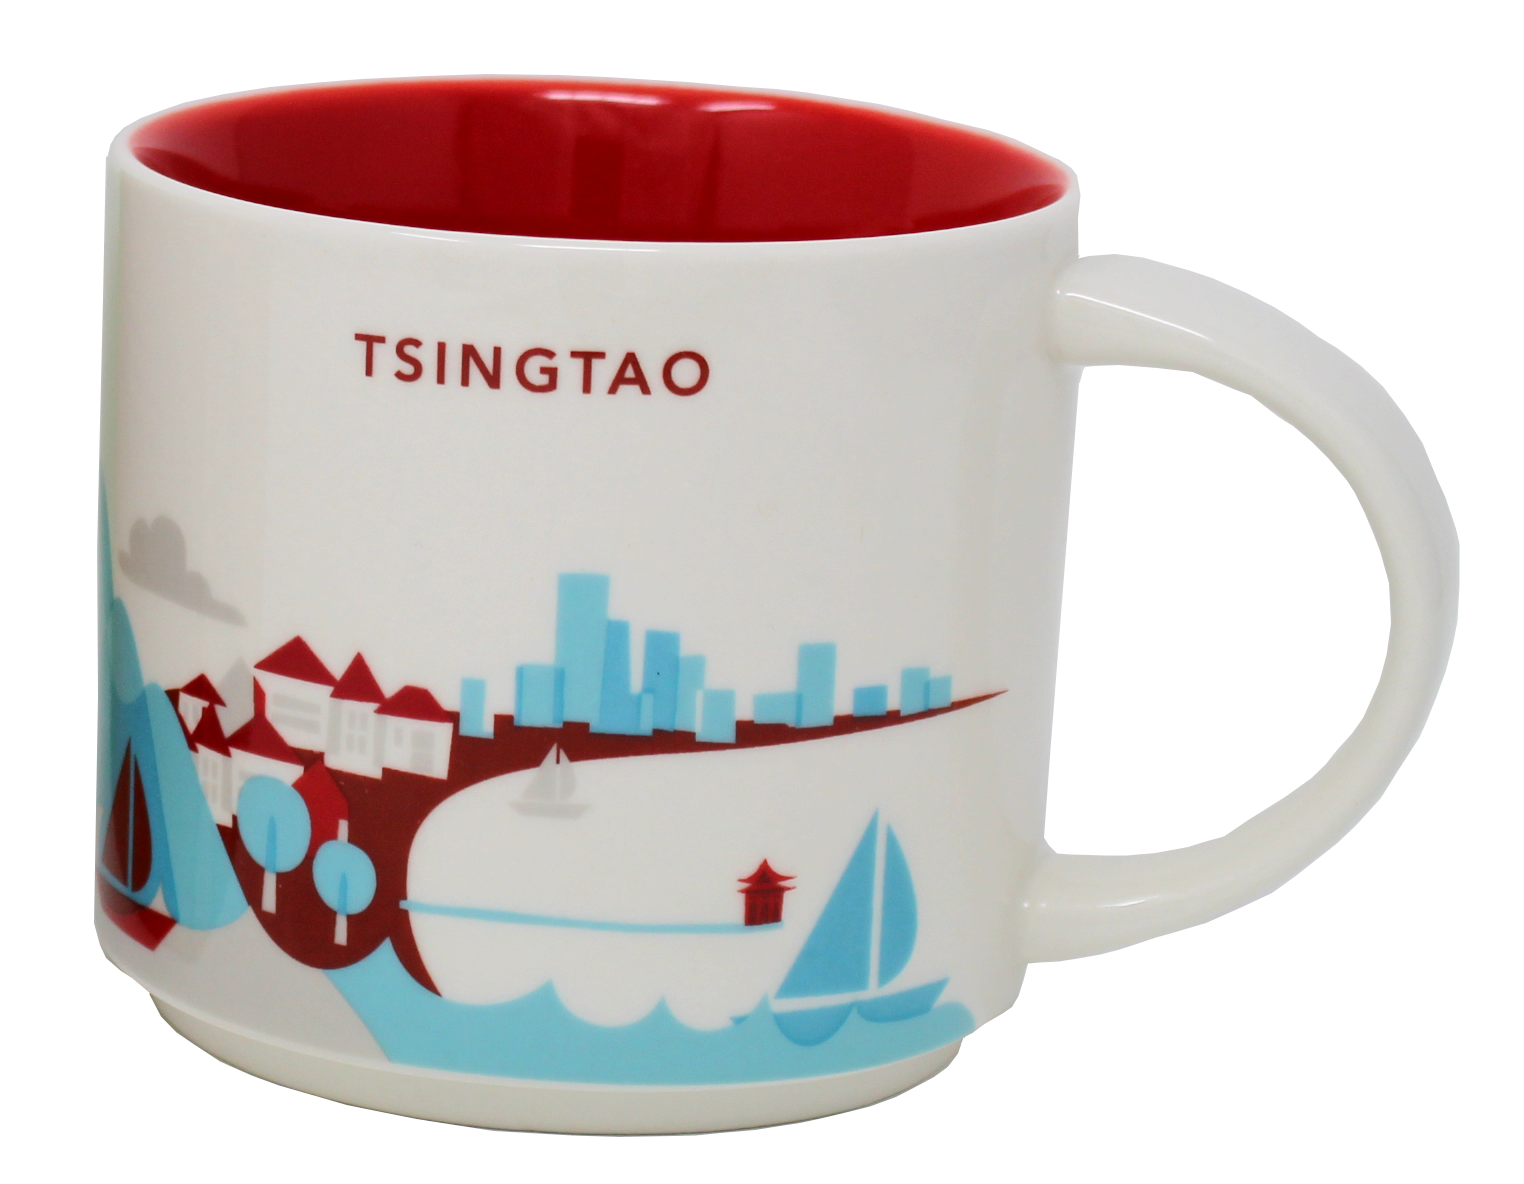 Starbucks You Are Here Series Tsingtao Ceramic Mug, 14 Oz